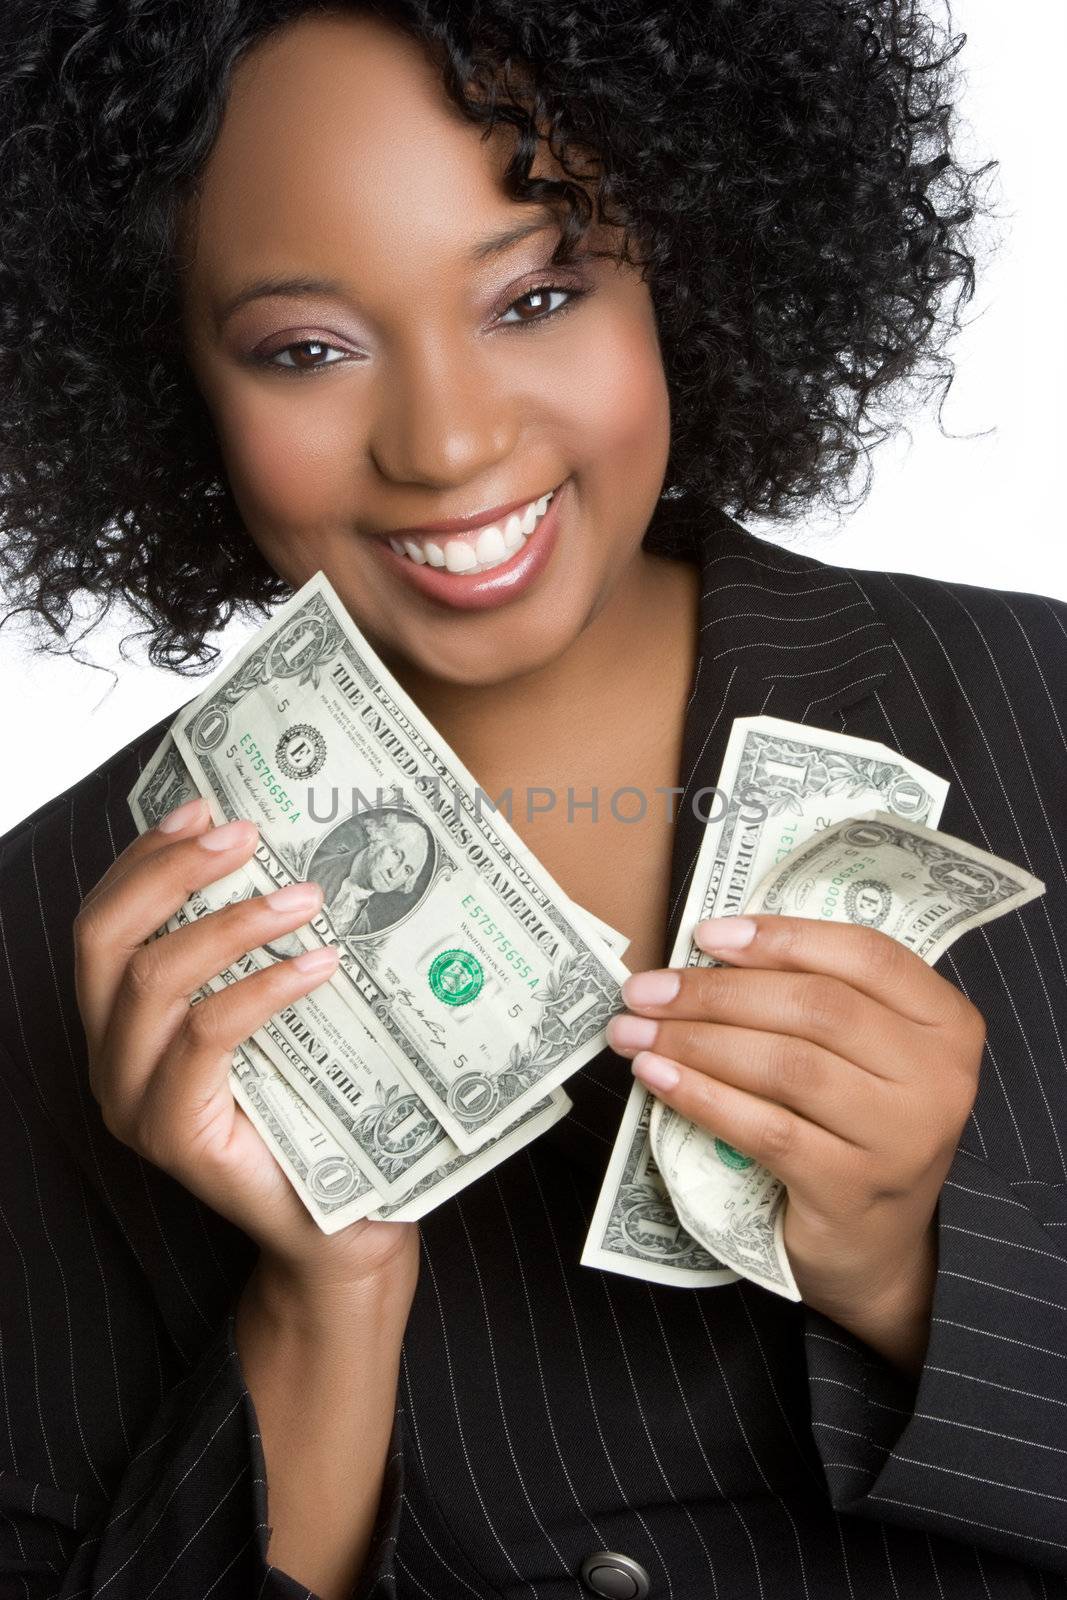 Smiling black woman holding money